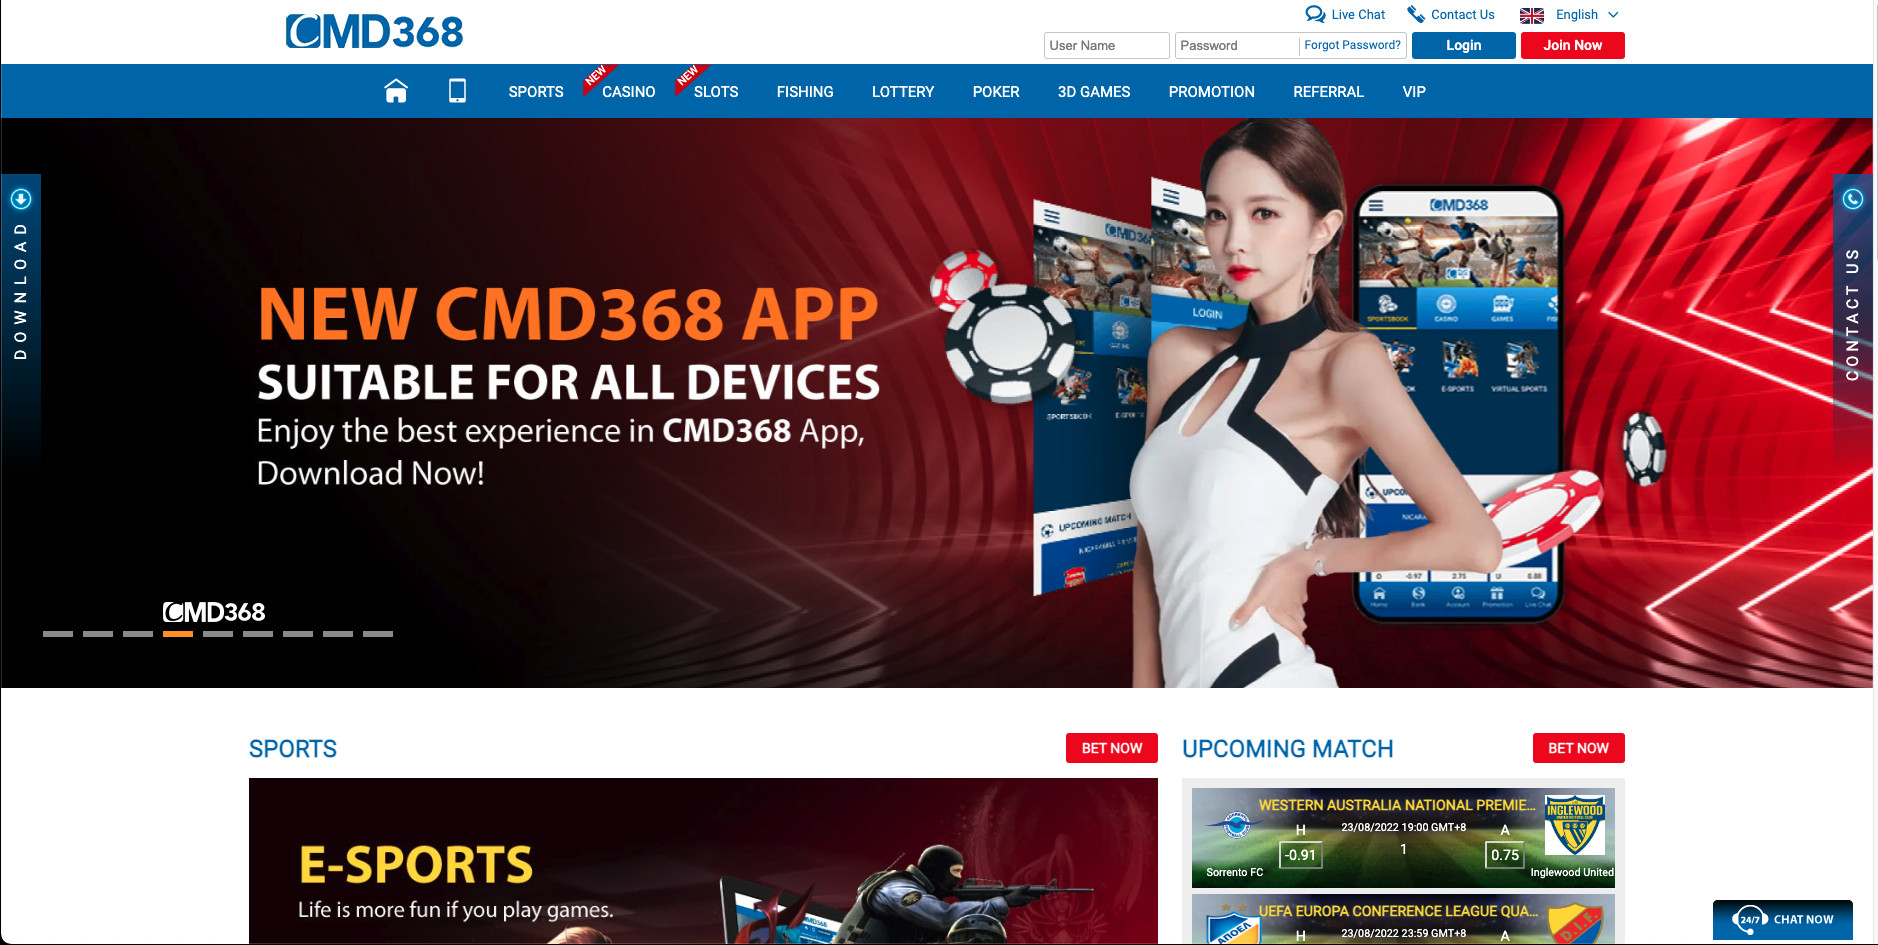 cmd368 betting site - homepage screen